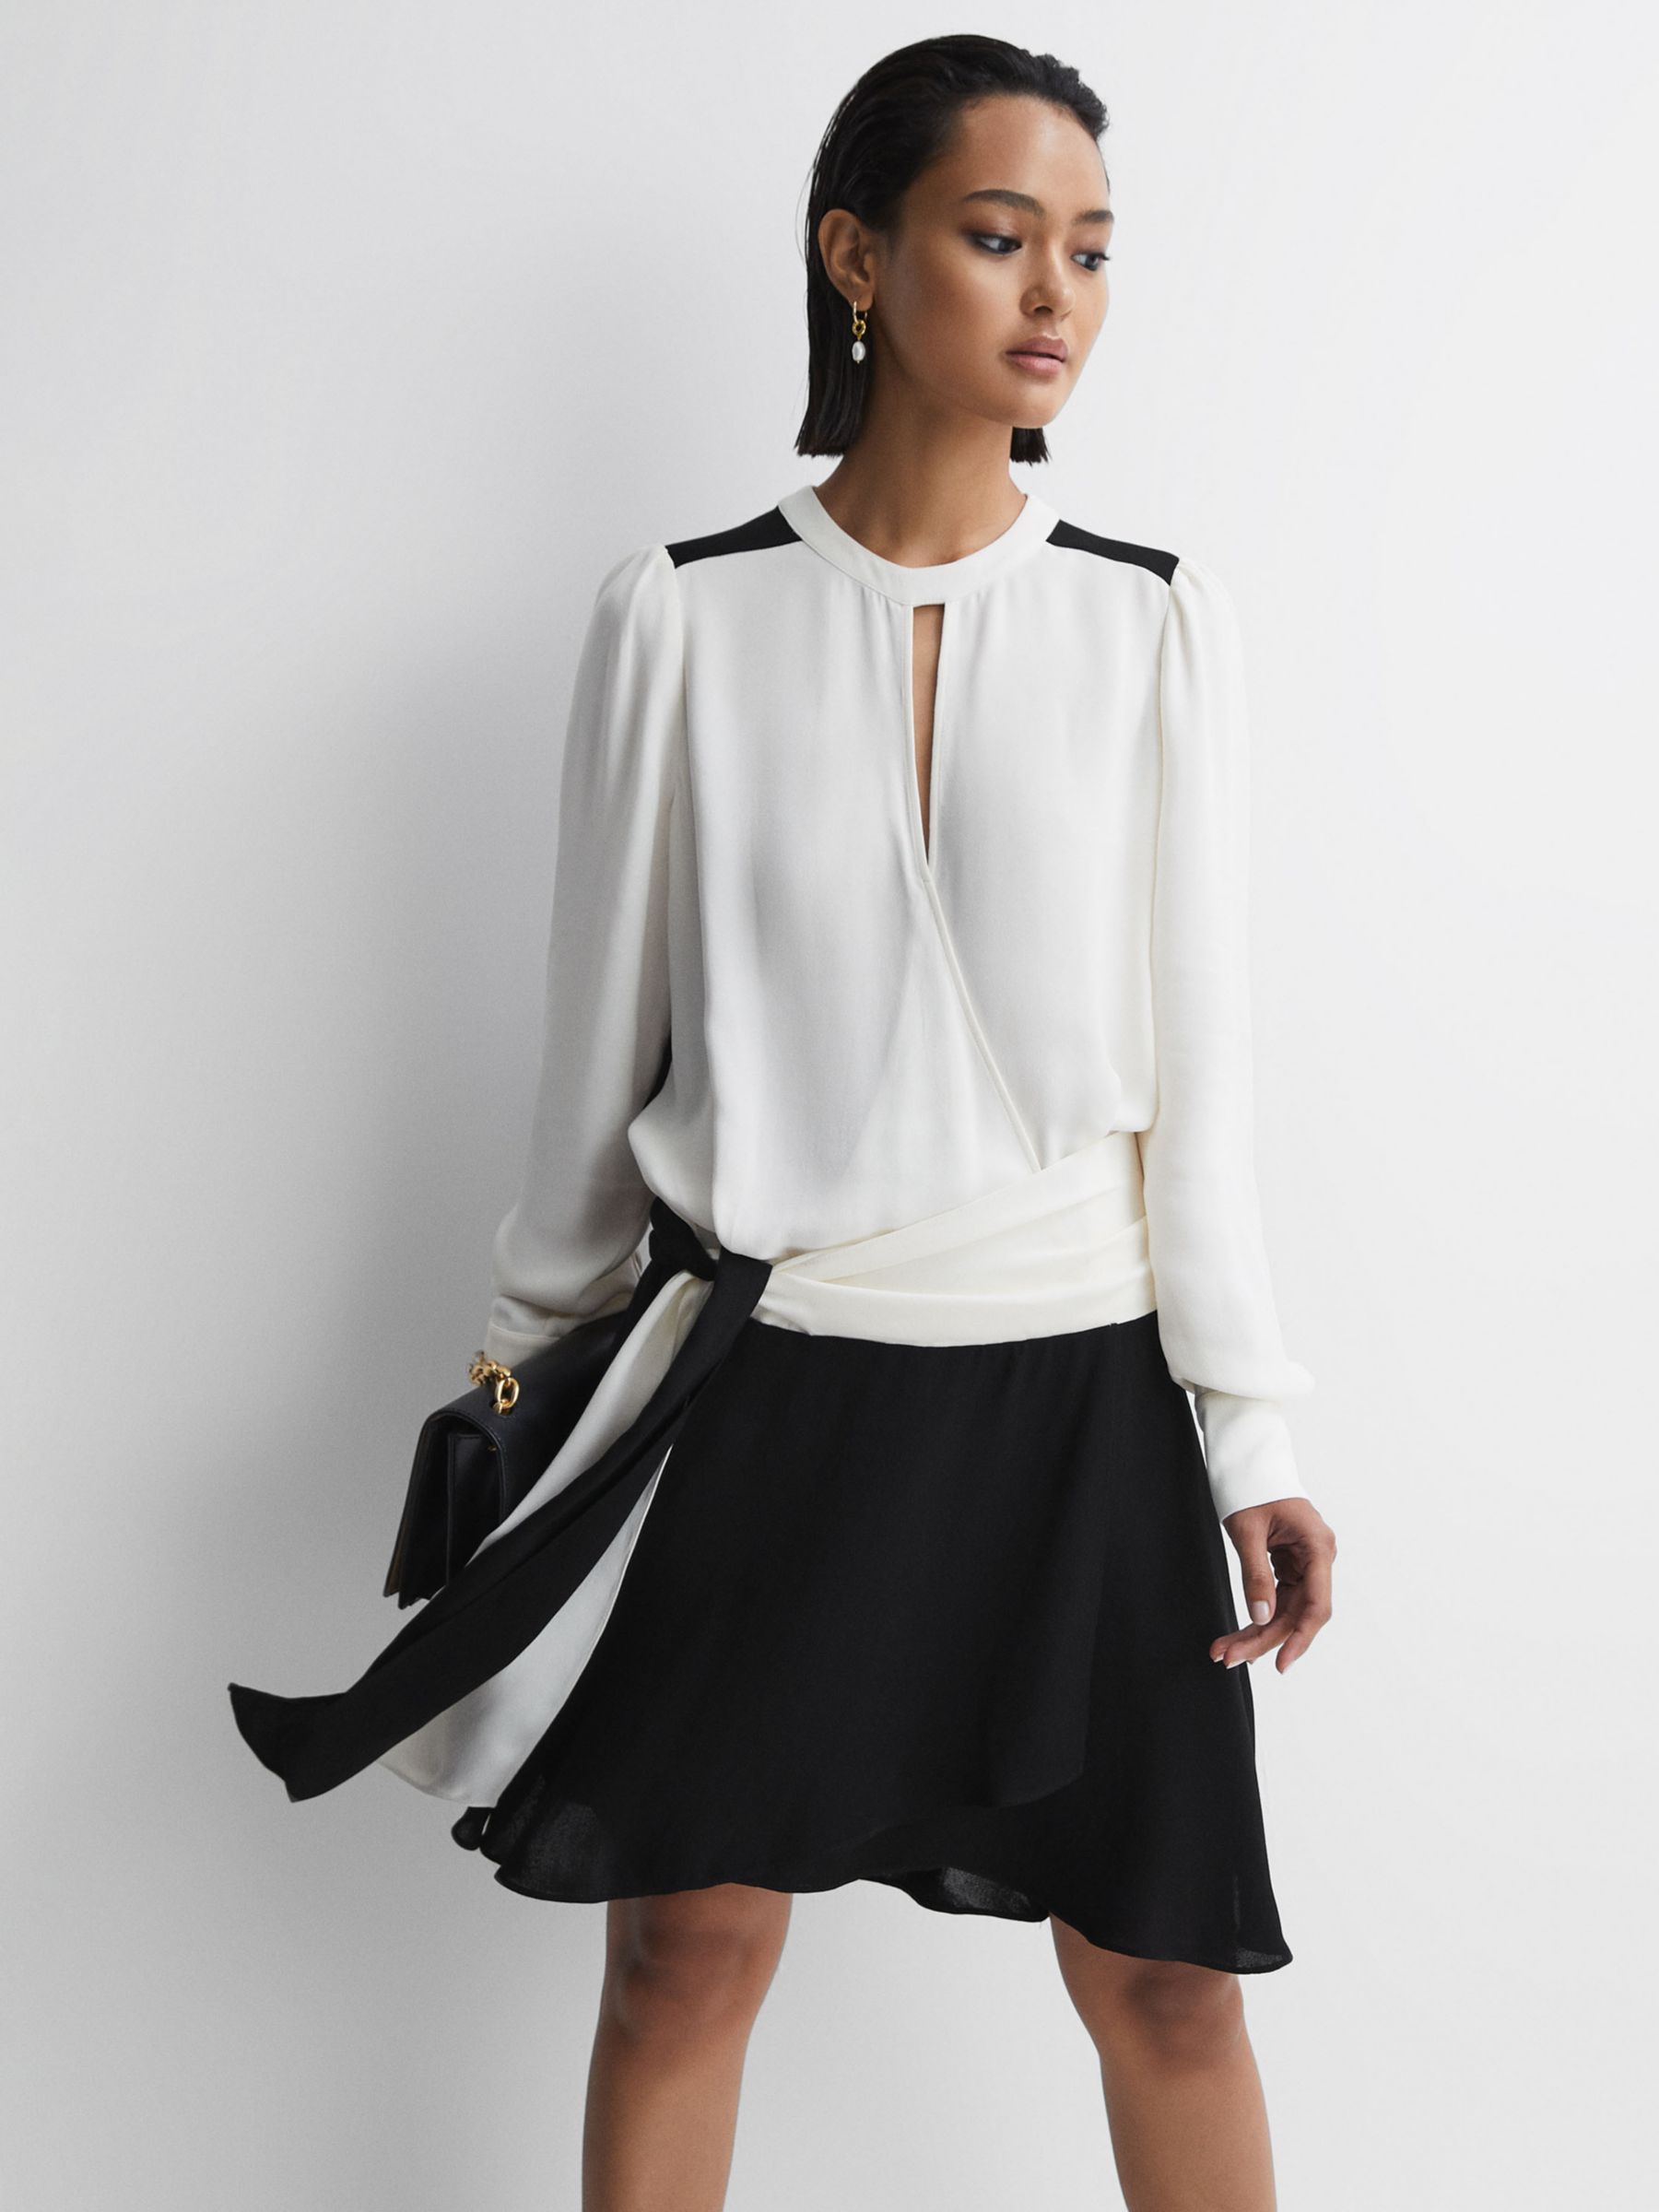 Reiss Sadie Colourblock Belted Mini Dress, Ivory/Black, 6